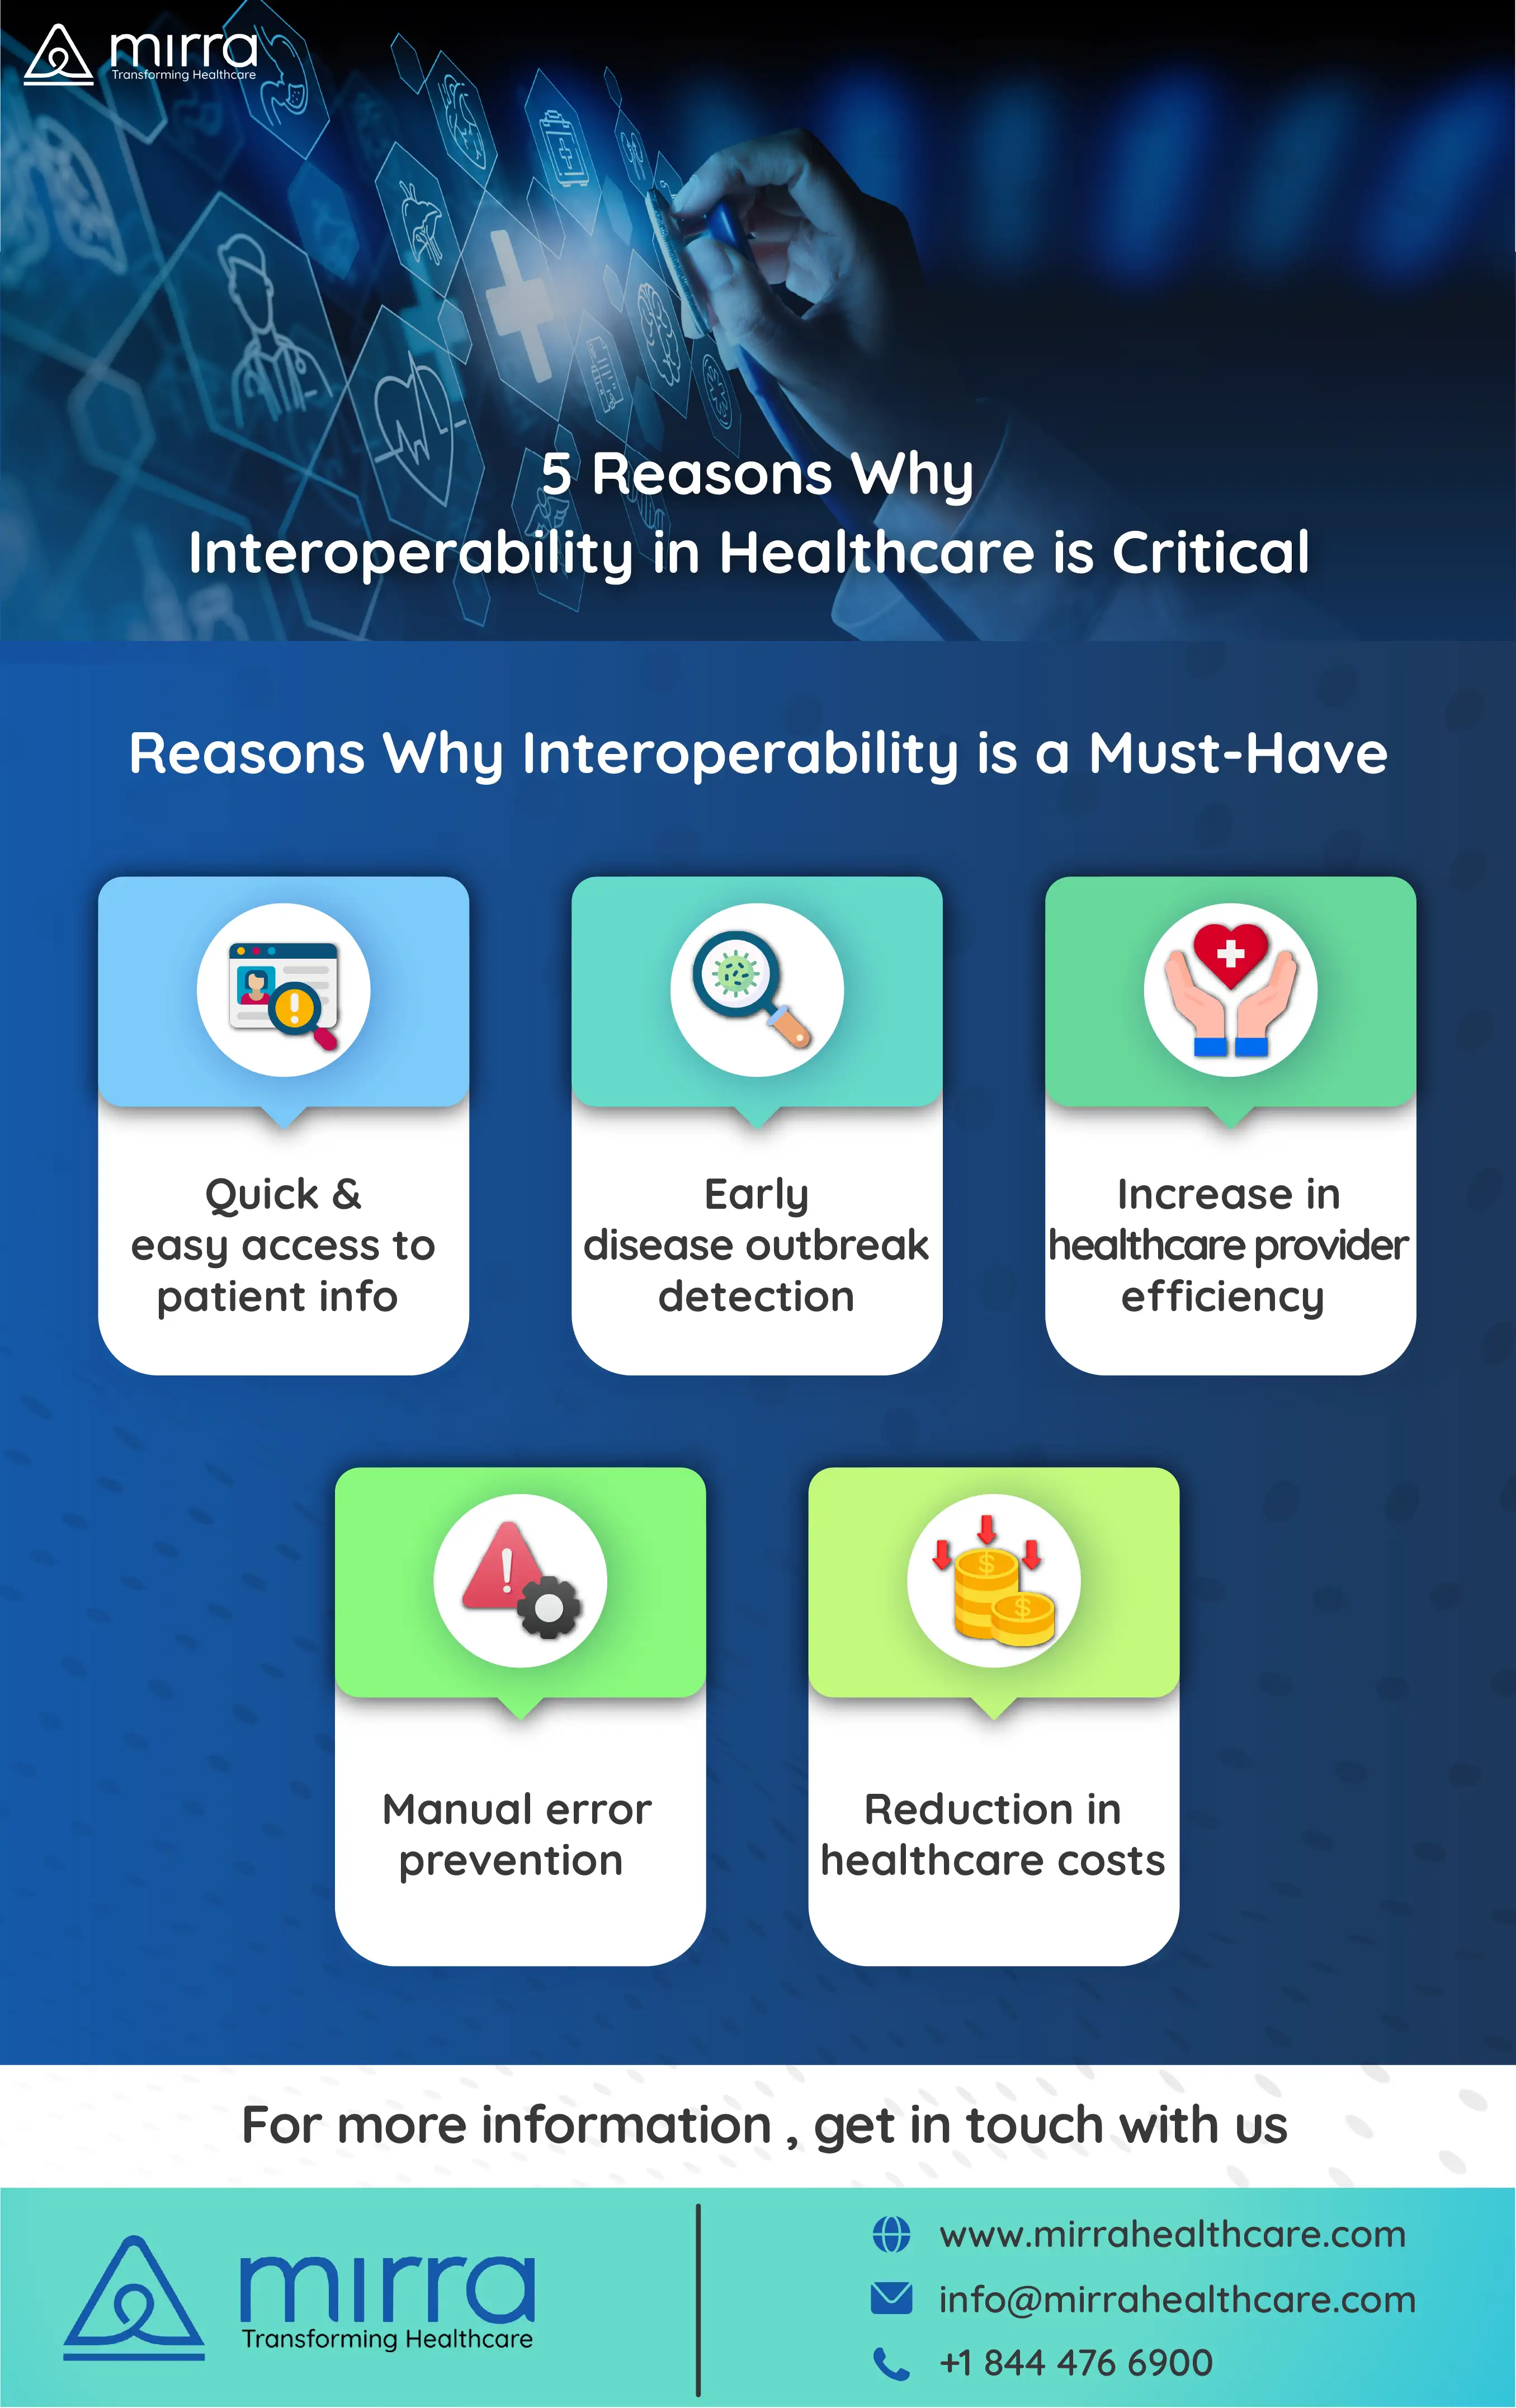 Benefits of interoperability in healthcare